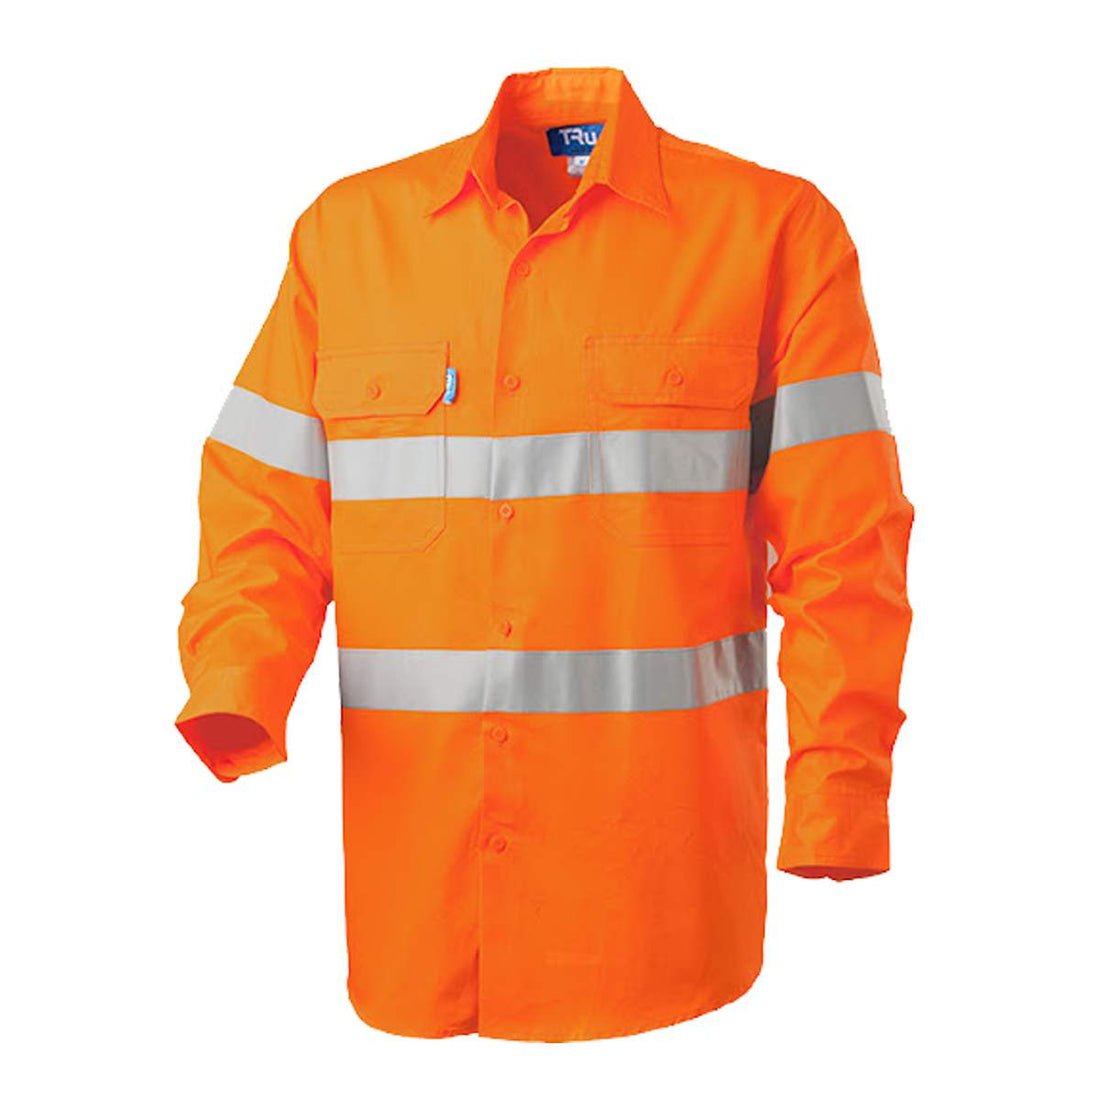 Tru Men's Light Weight horizontal Vented Taped Shirt orange DS1166T3